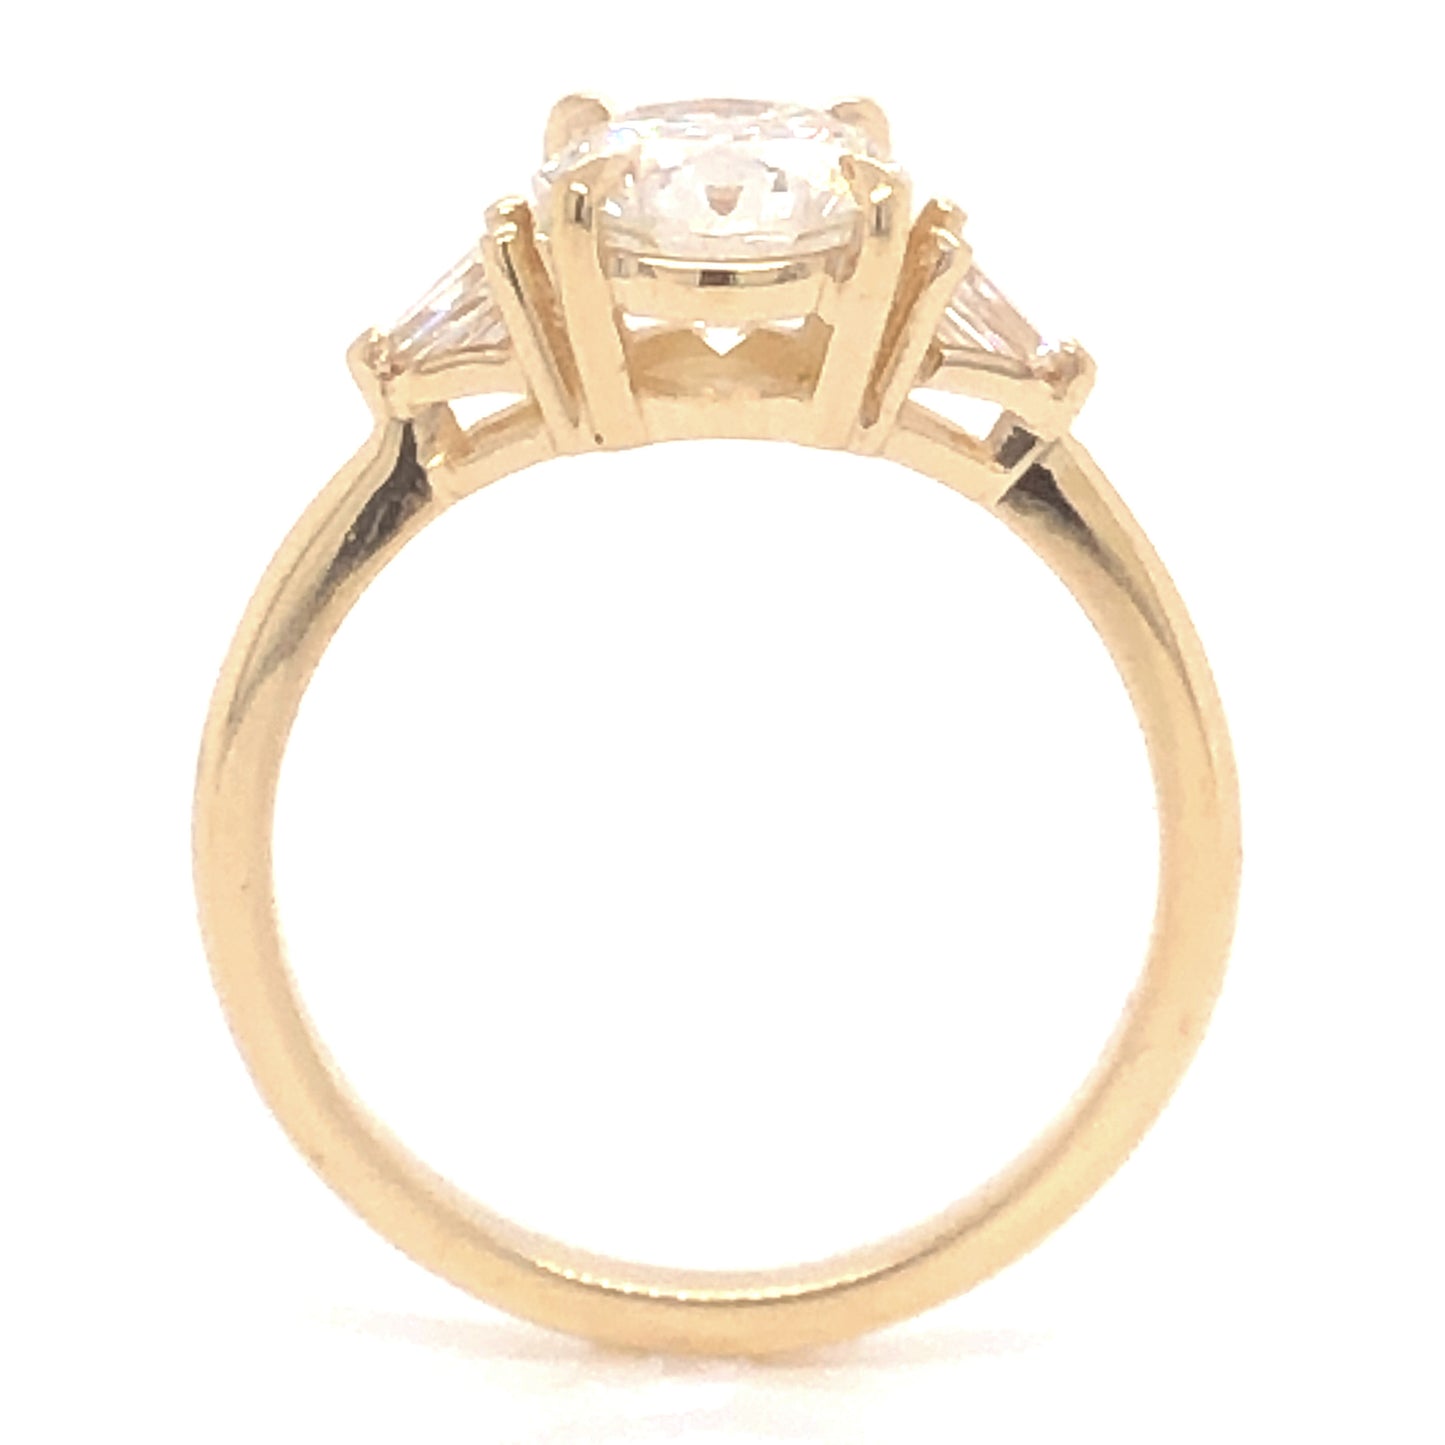 1.39 Diamond Engagement Ring in 14K Yellow Gold